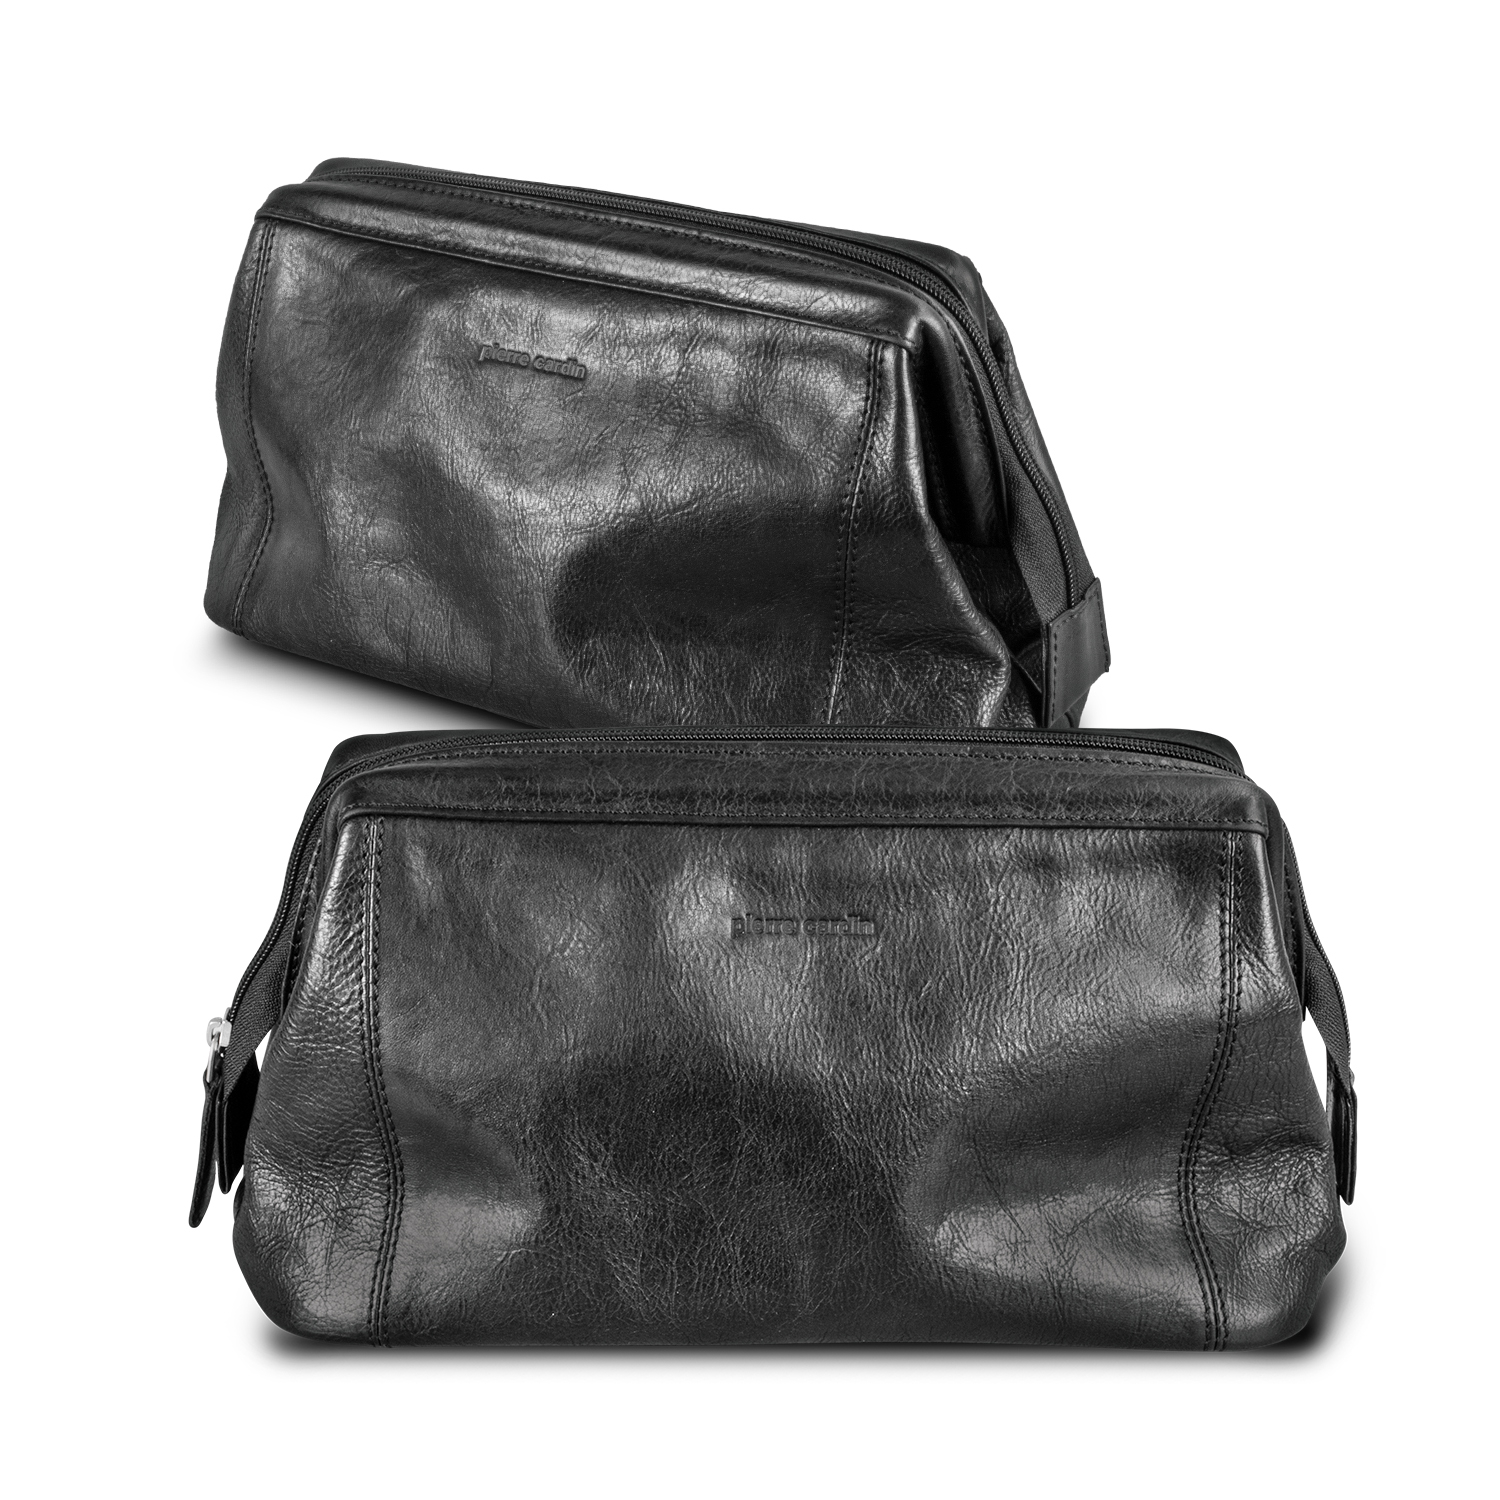 Pierre Cardin Pierre Cardin Leather Toiletry Bag bag